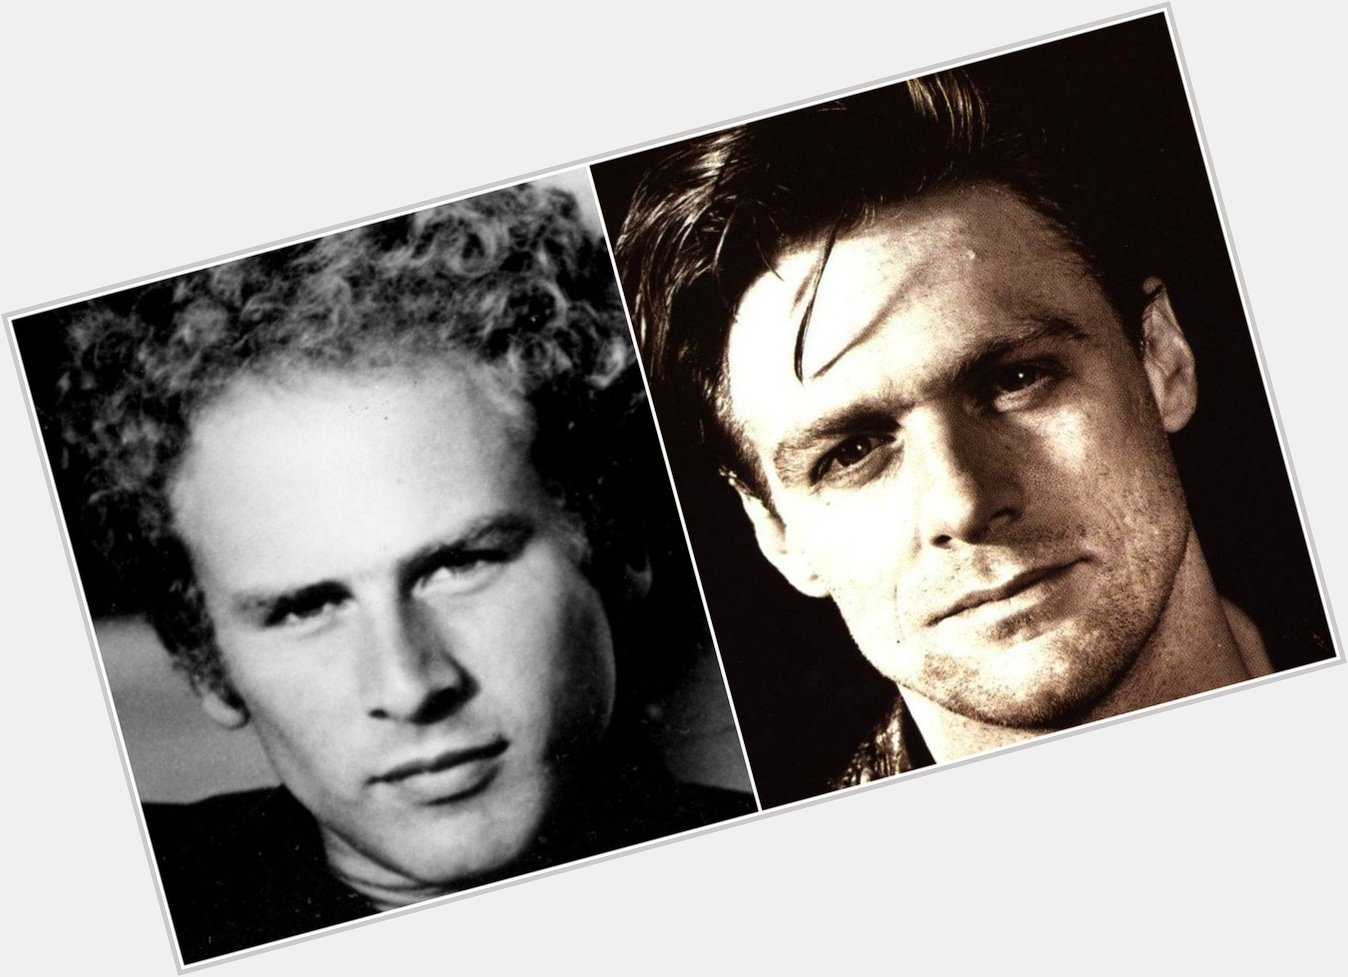 Happy belated birthday to these two music legends yesterday! Many happy returns & Art Garfunkel... 